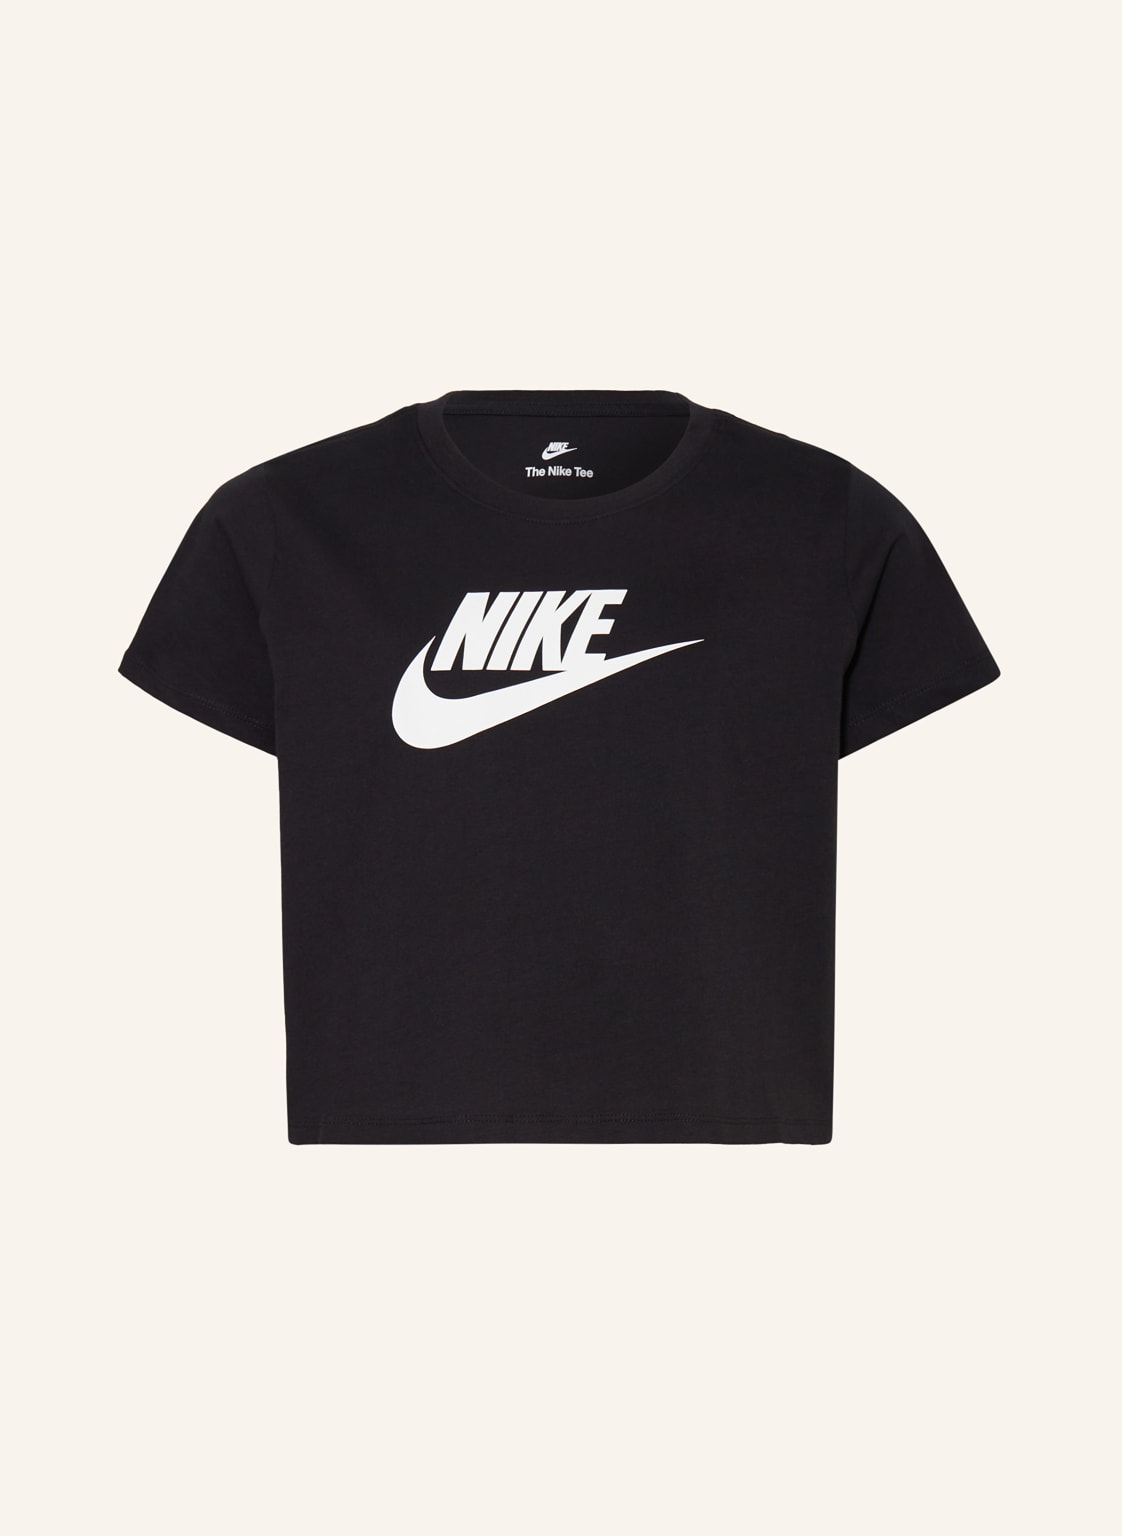 Nike Cropped-Shirt schwarz von Nike